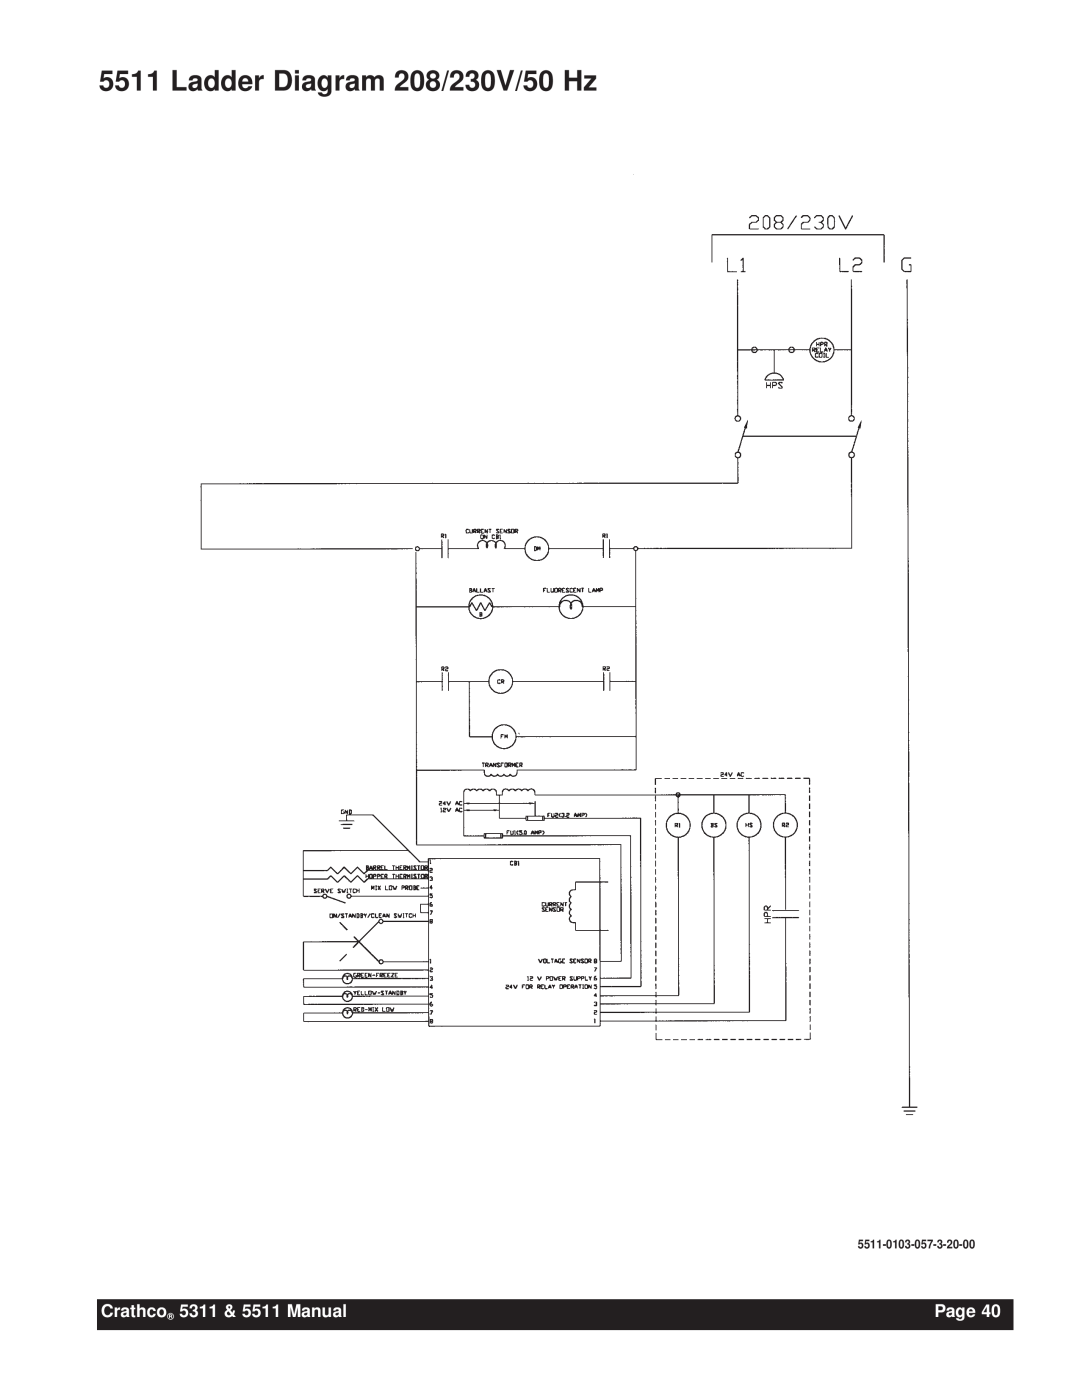 Grindmaster instruction manual Ladder Diagram 208/230V/50 Hz, Crathco 5311 & 5511 Manual, Page, 5511-0103-057-3-20-00 